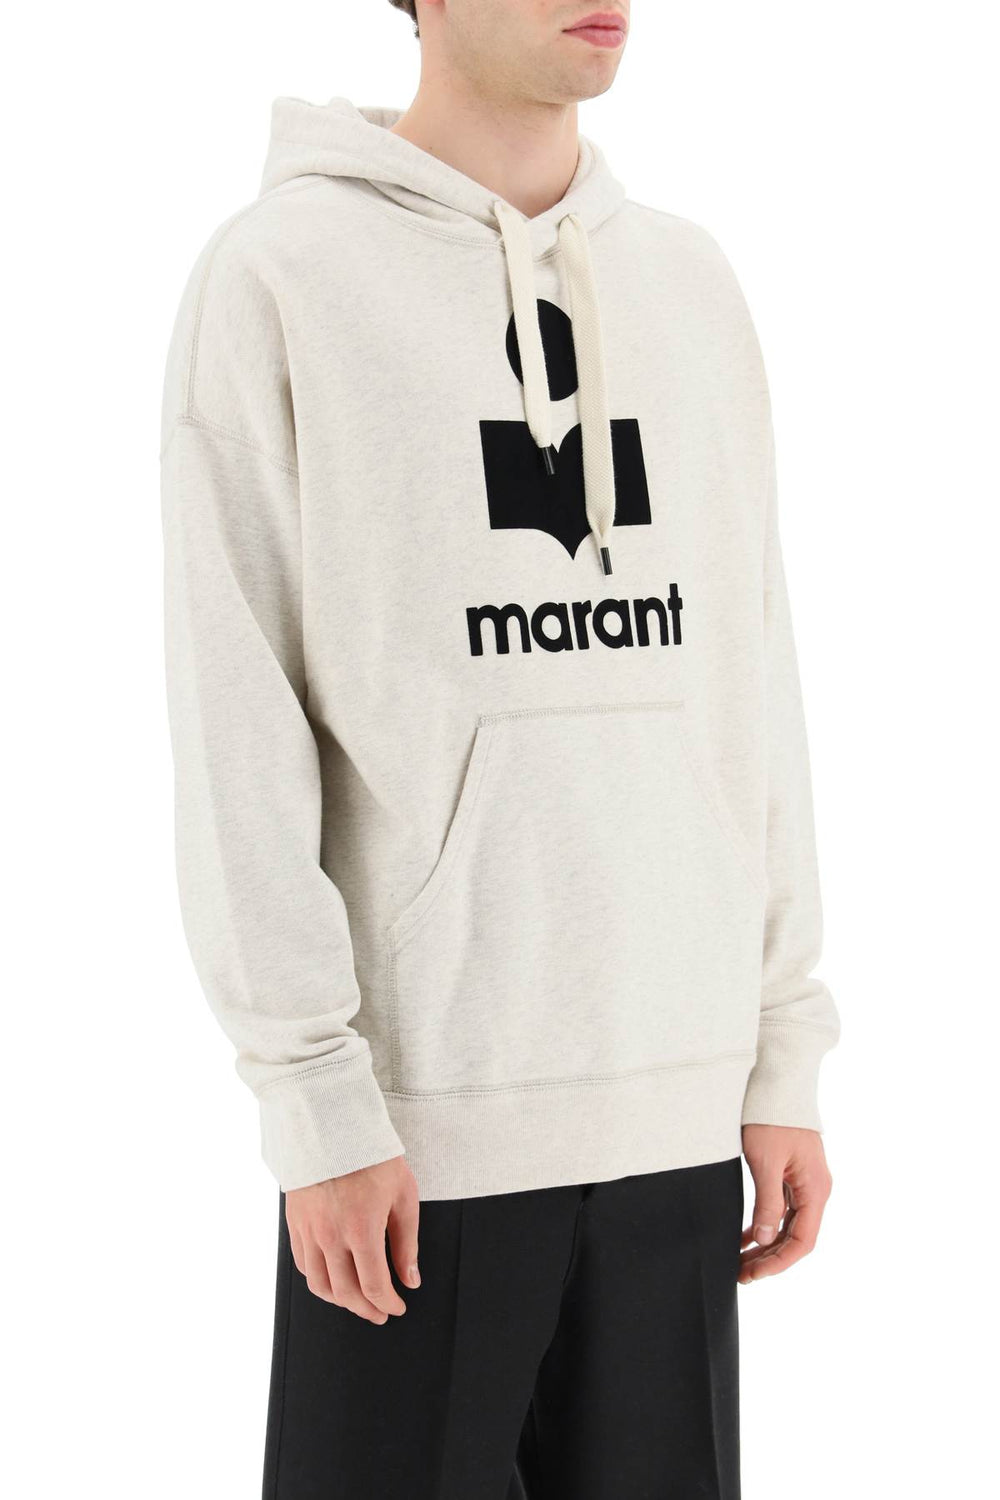 Marant 'miley' hoodie with flocked logo-1